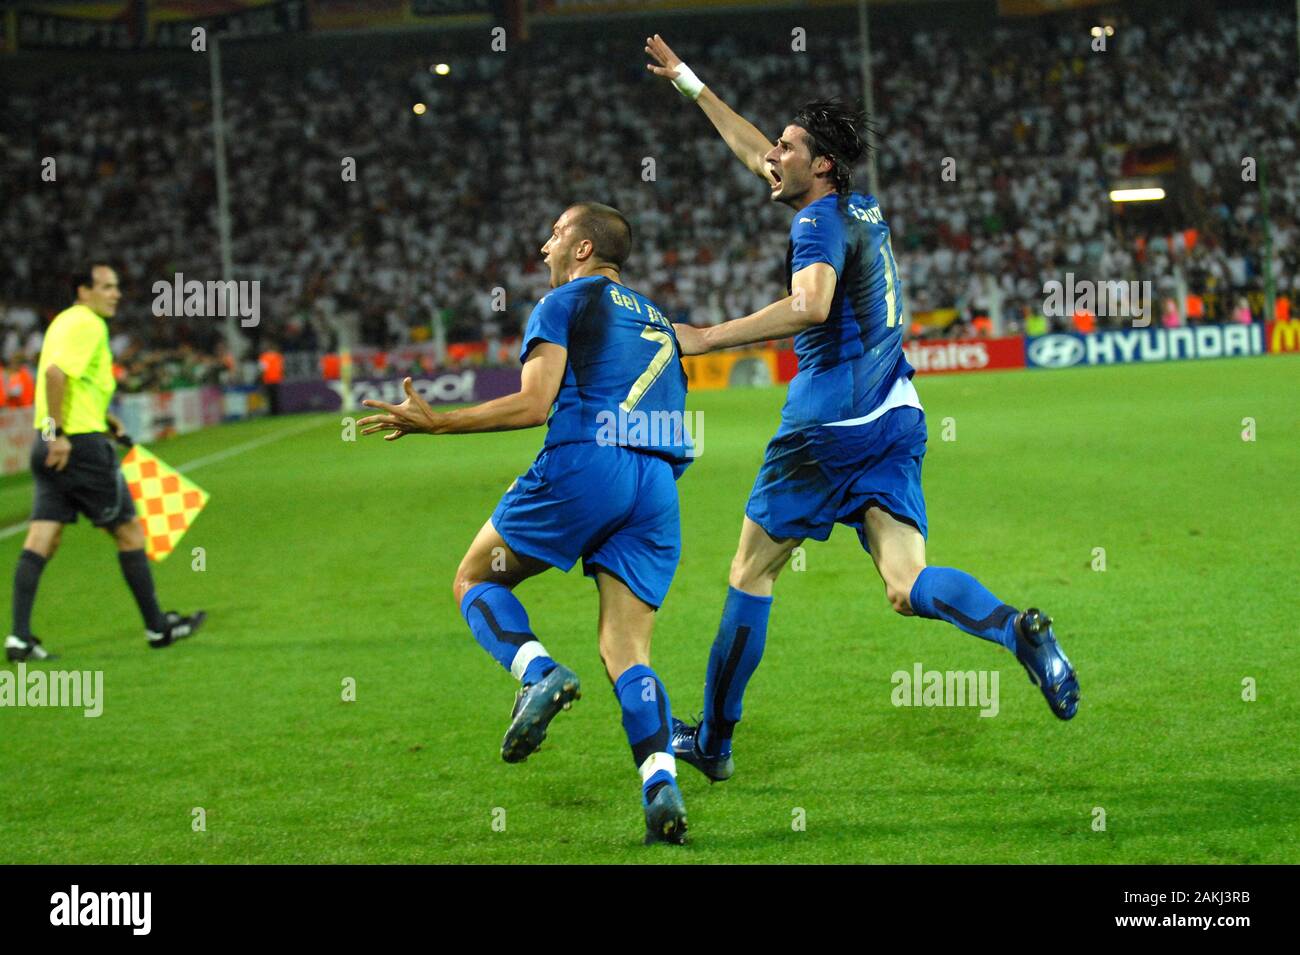 Dortmund Germany, 4 July 2006, FIFA World Cup Germany 2006, Germany-Italy semi-final at the Westfalenstadion: Alessandro Del Piero  celebrate the goal Stock Photo